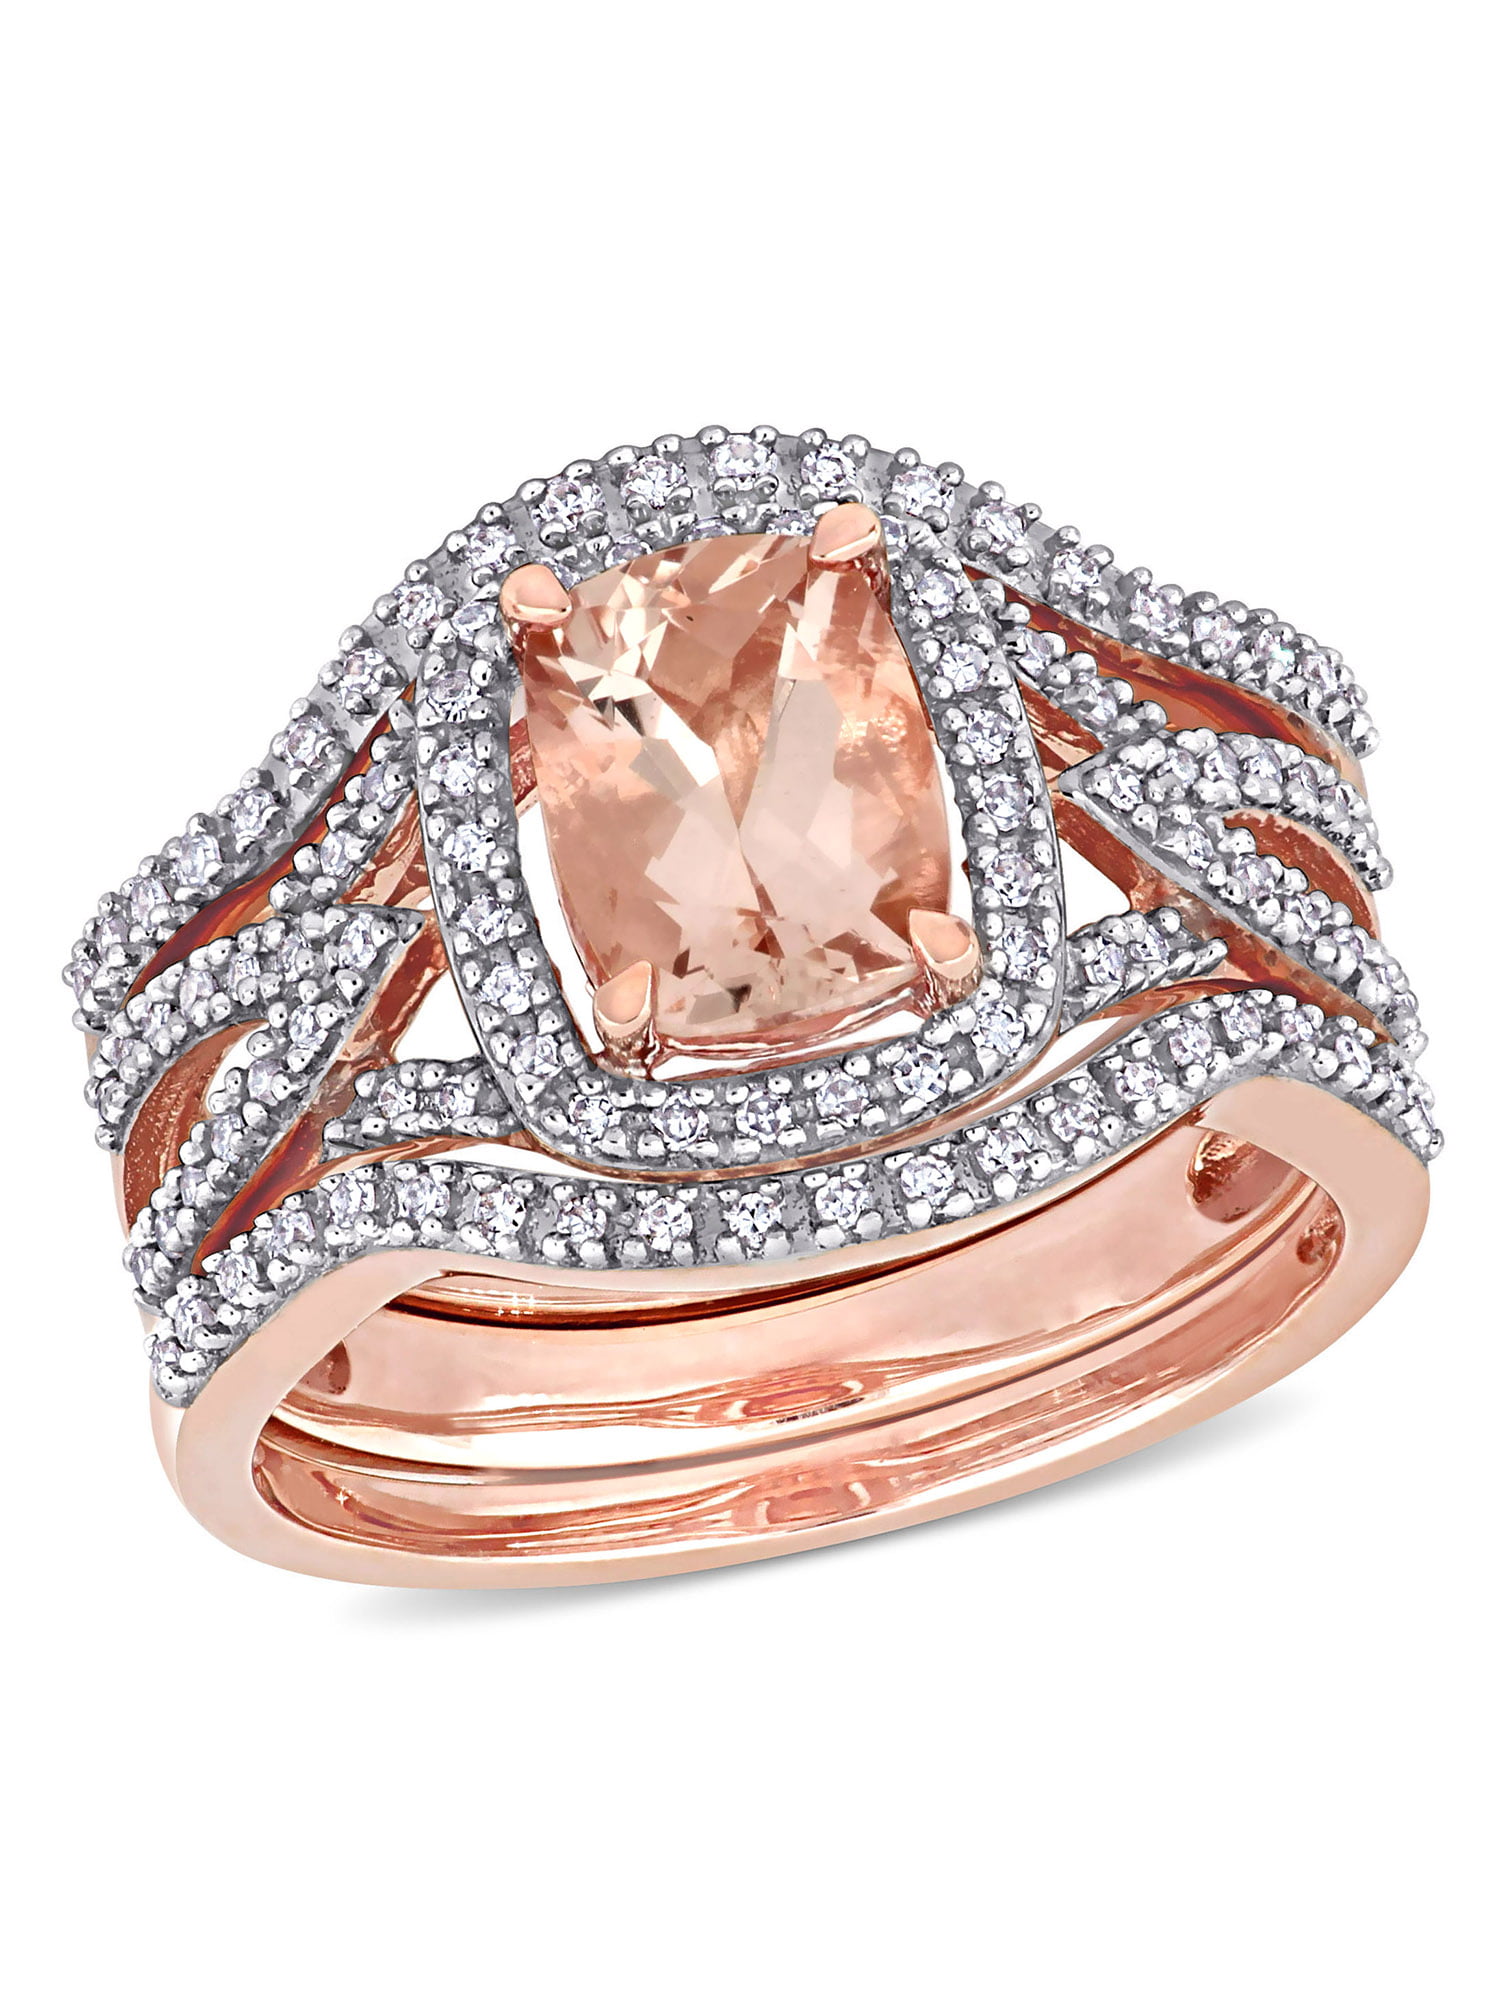 3Pc/Set 18K Solid Rose Gold Morganite Gemstone Ring Women Wedding Jewelry SZ6-10 